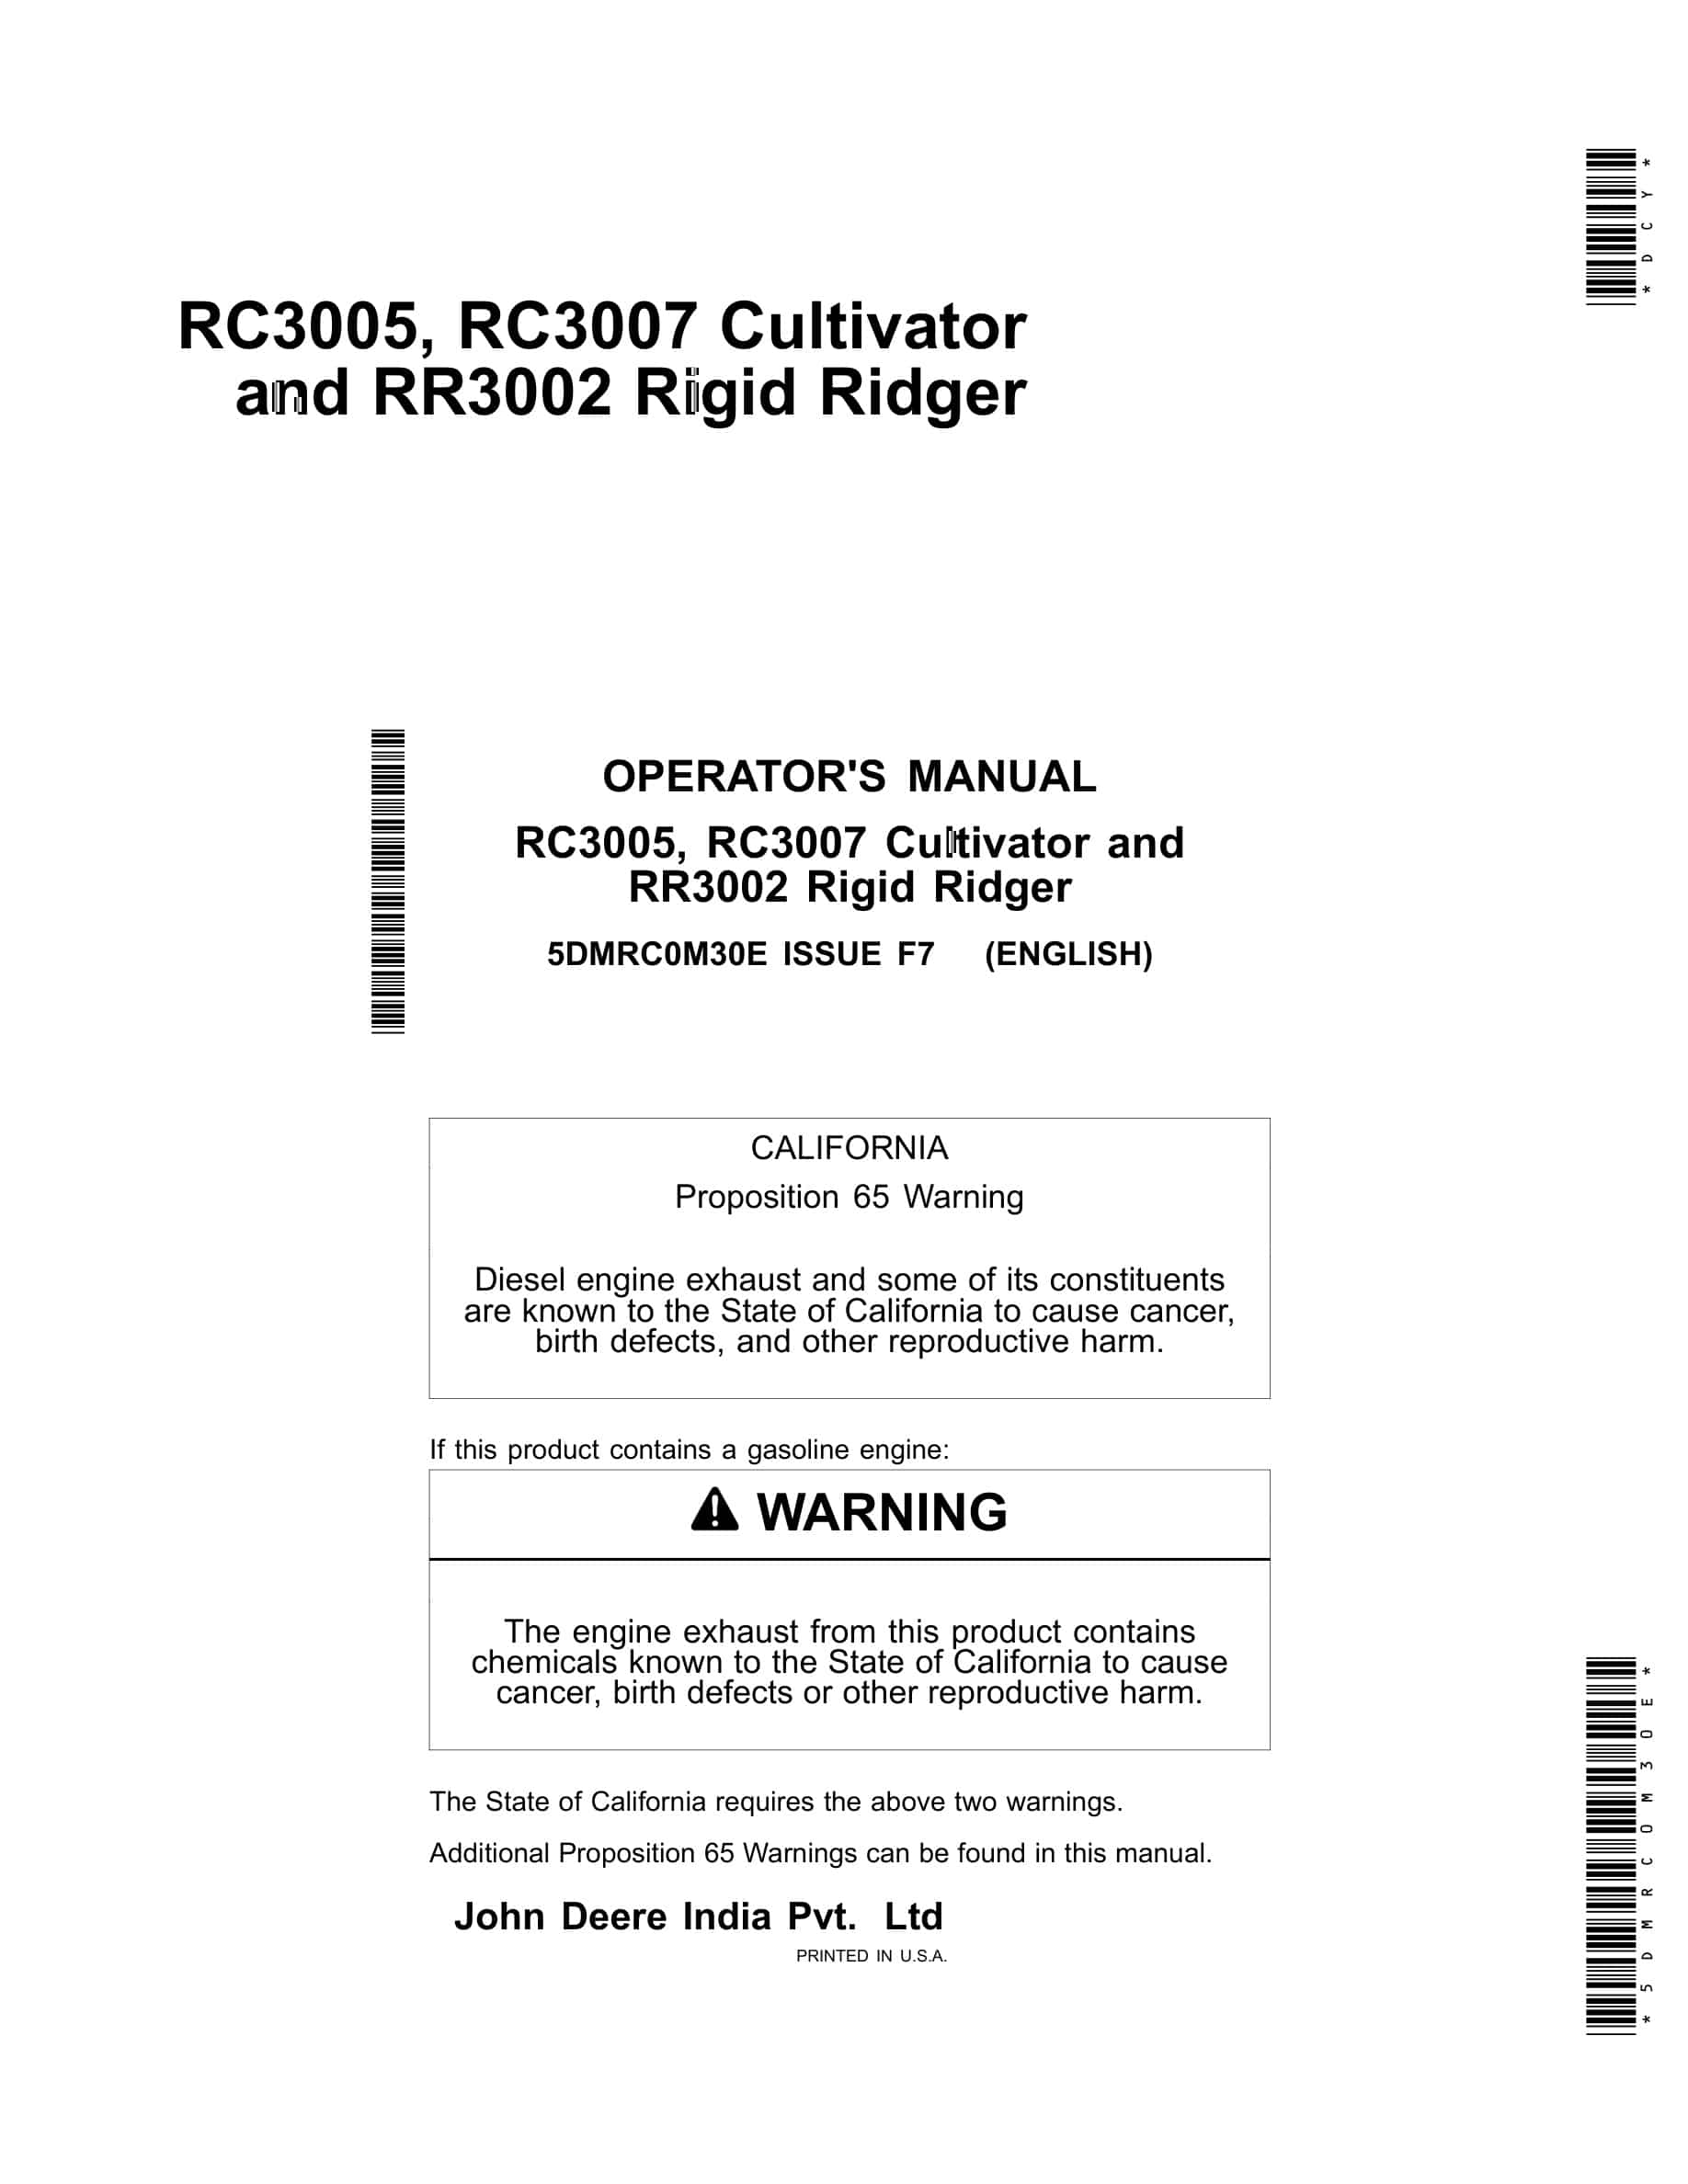 John Deere RC3005, RC3007 CULTIVATOR and RR3002 Rigid Ridger Operator Manual 5DMRC0M30E-1